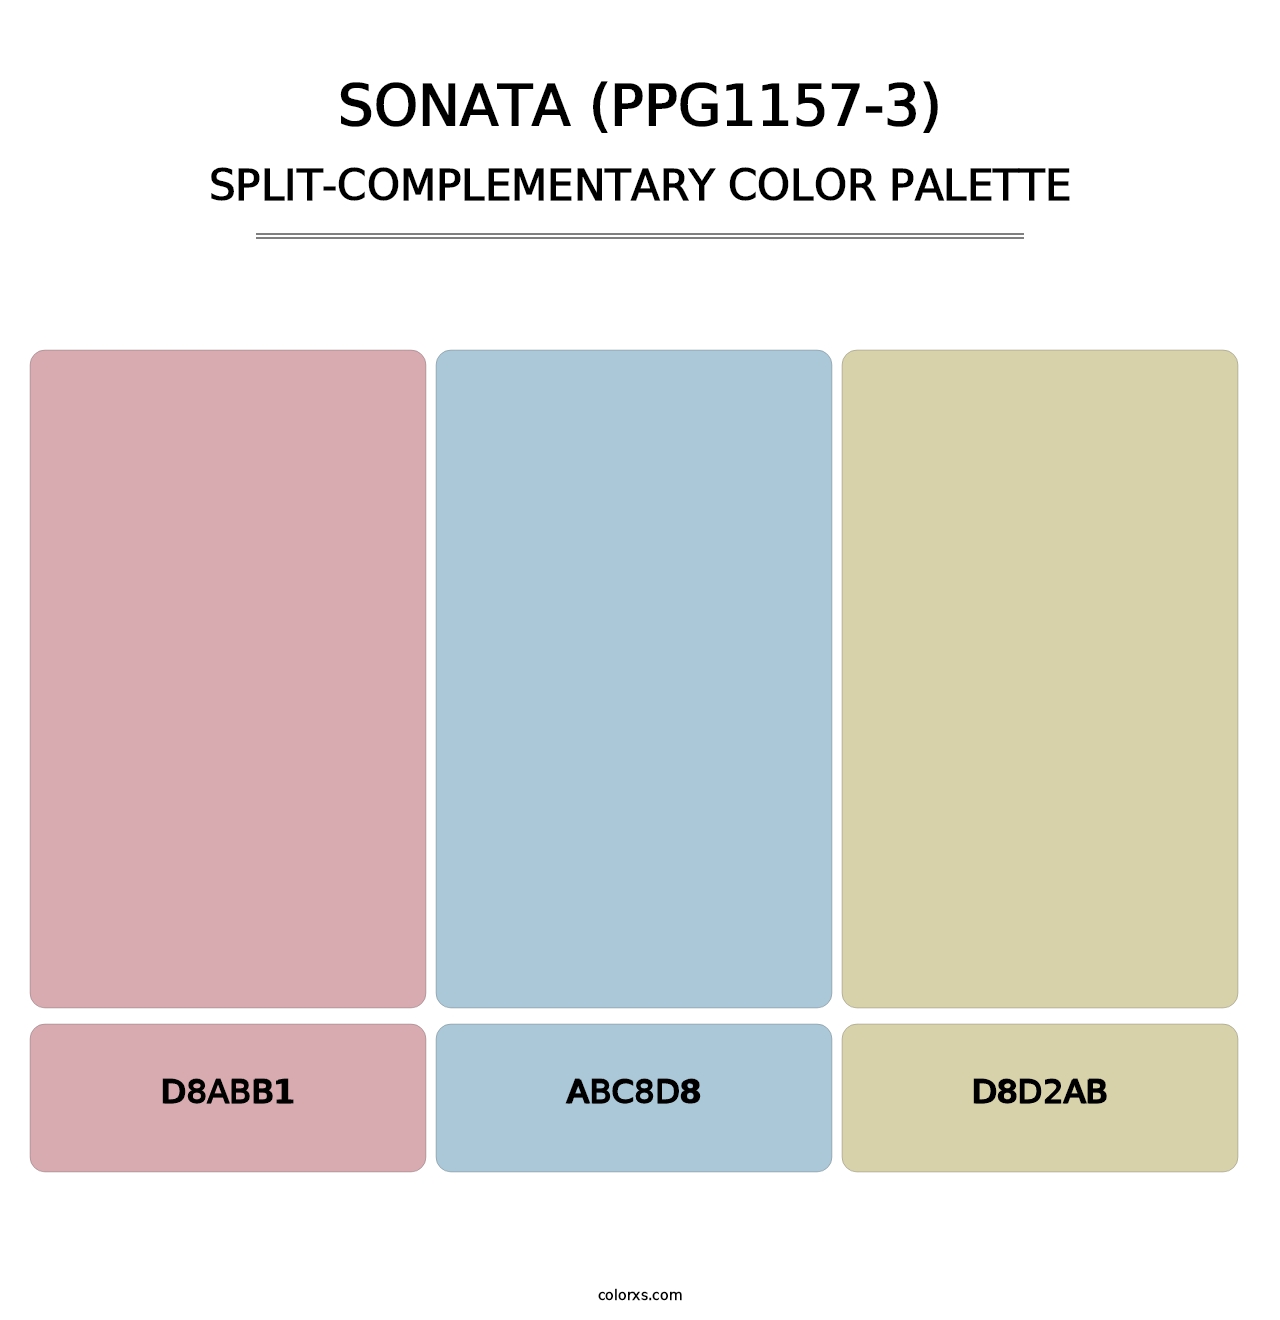 Sonata (PPG1157-3) - Split-Complementary Color Palette